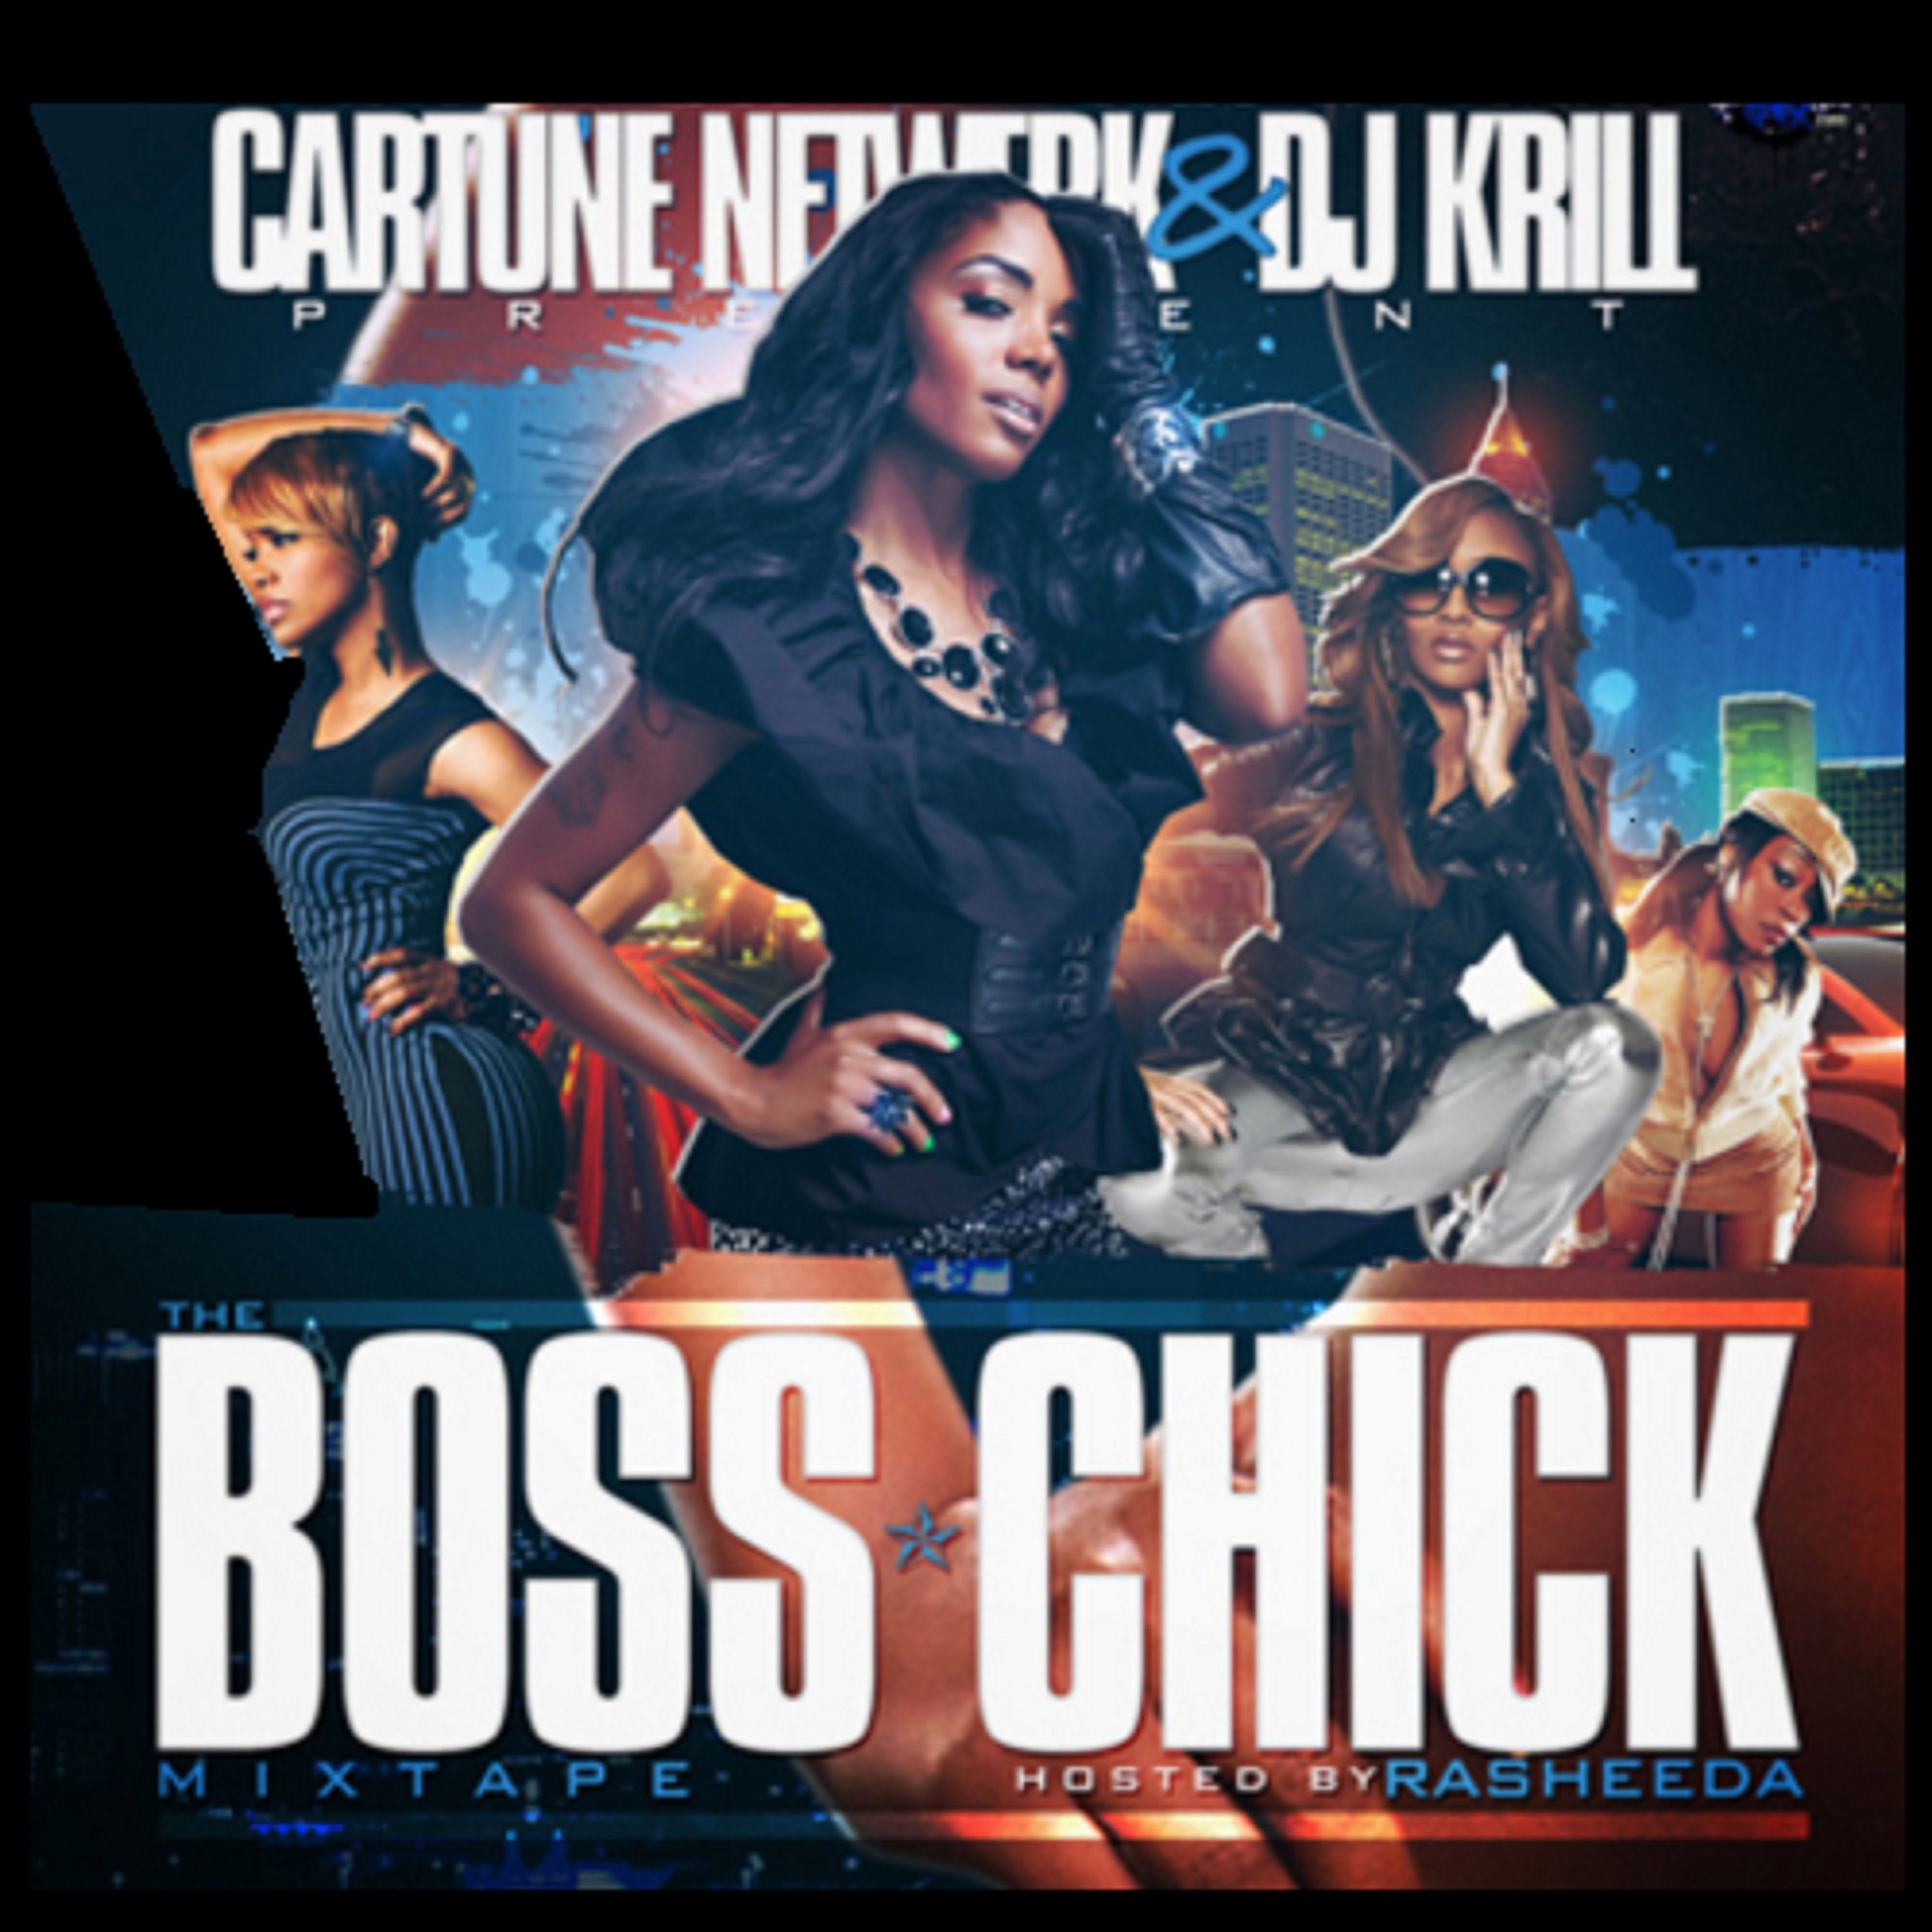 The Boss Chick Mixtape